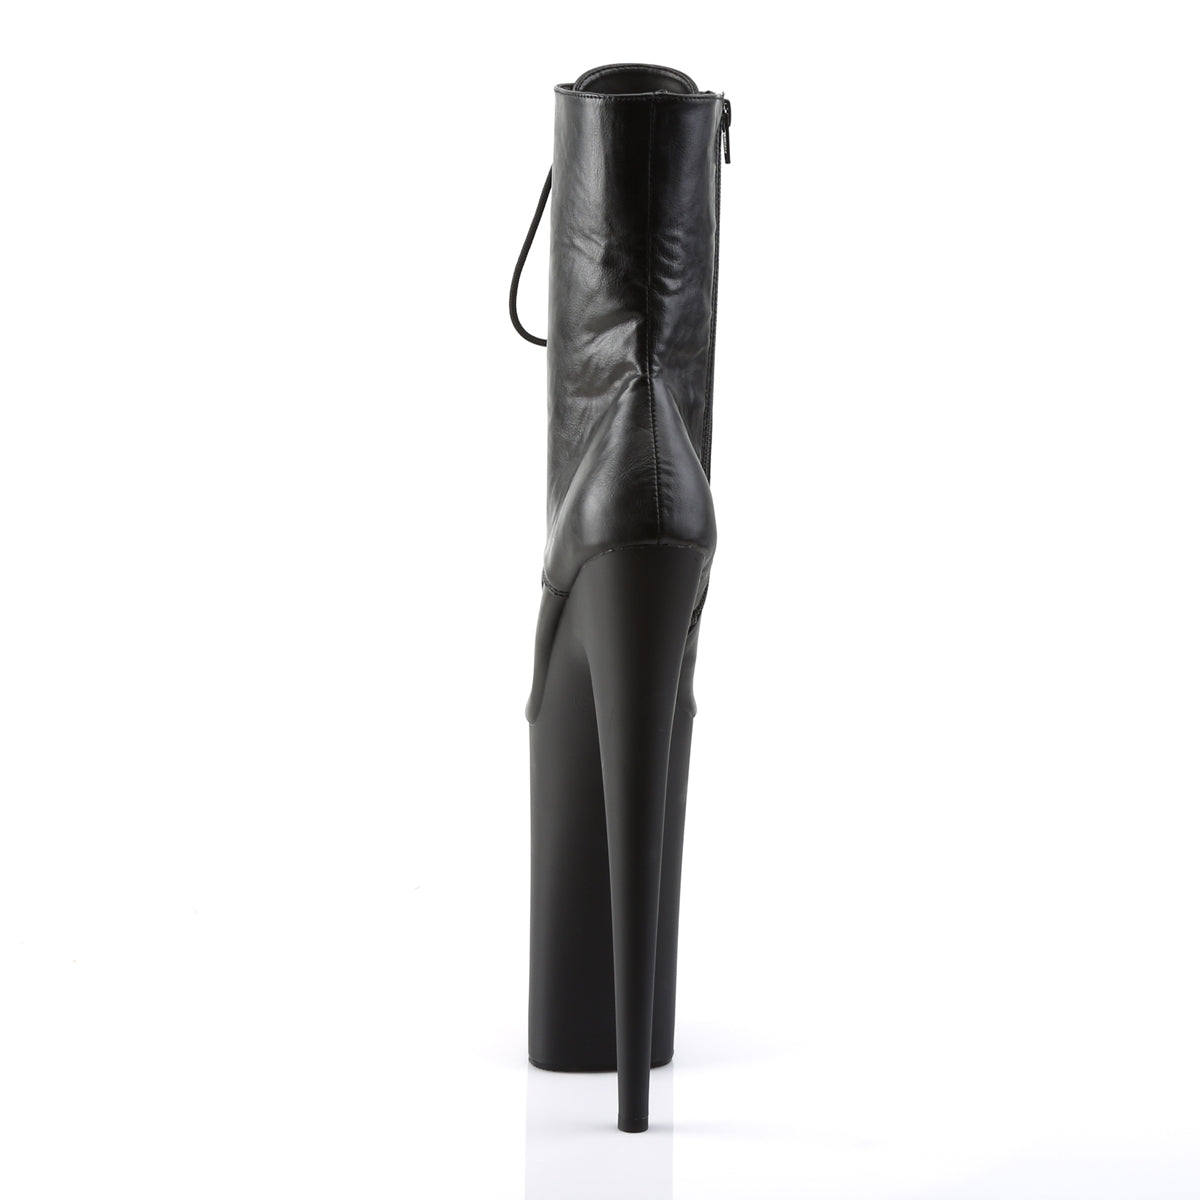 BEYOND-1020 Pleaser Black Faux Leather/Black Matte Platform Shoes [Extreme High Heels]